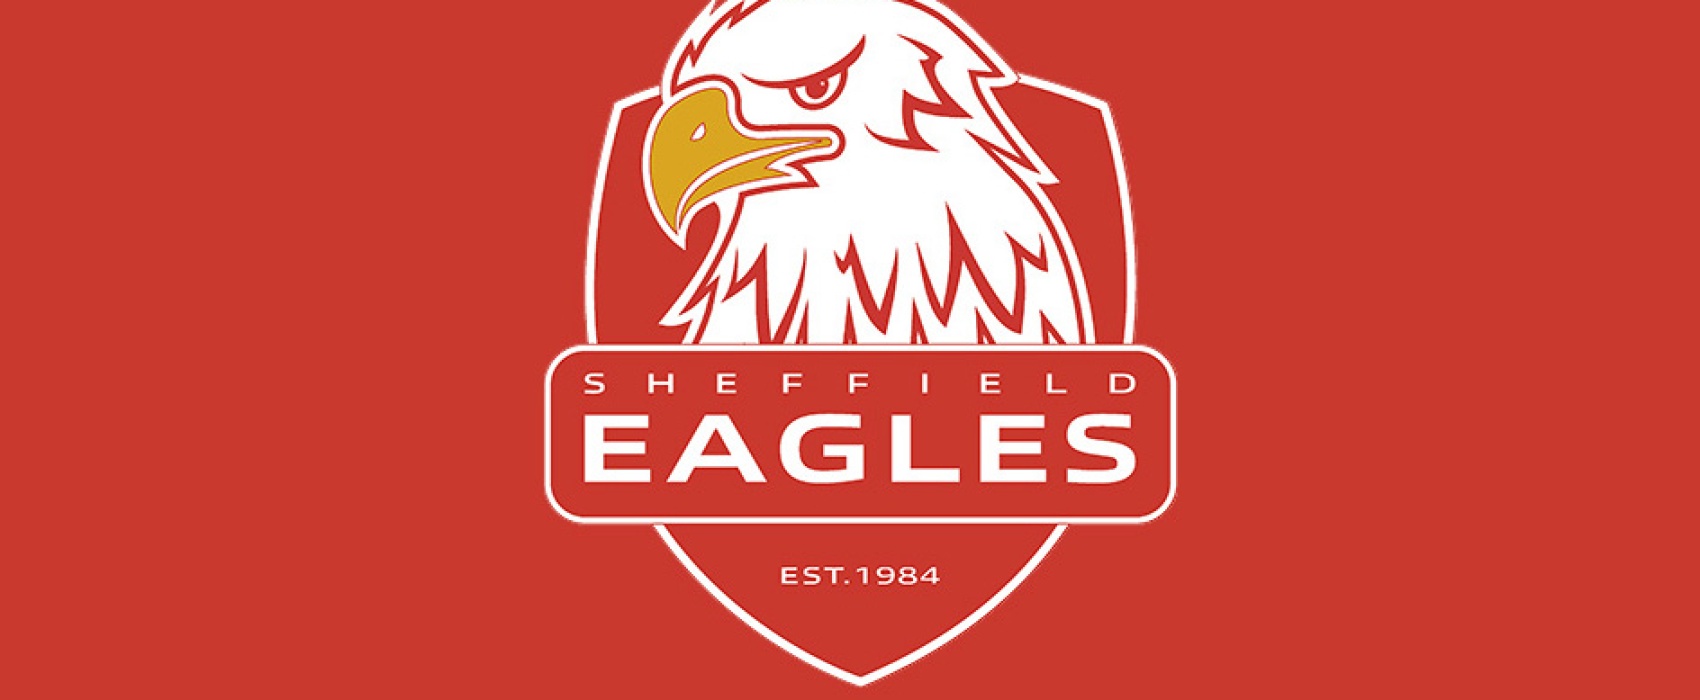 Mascot needed as Eagles return home